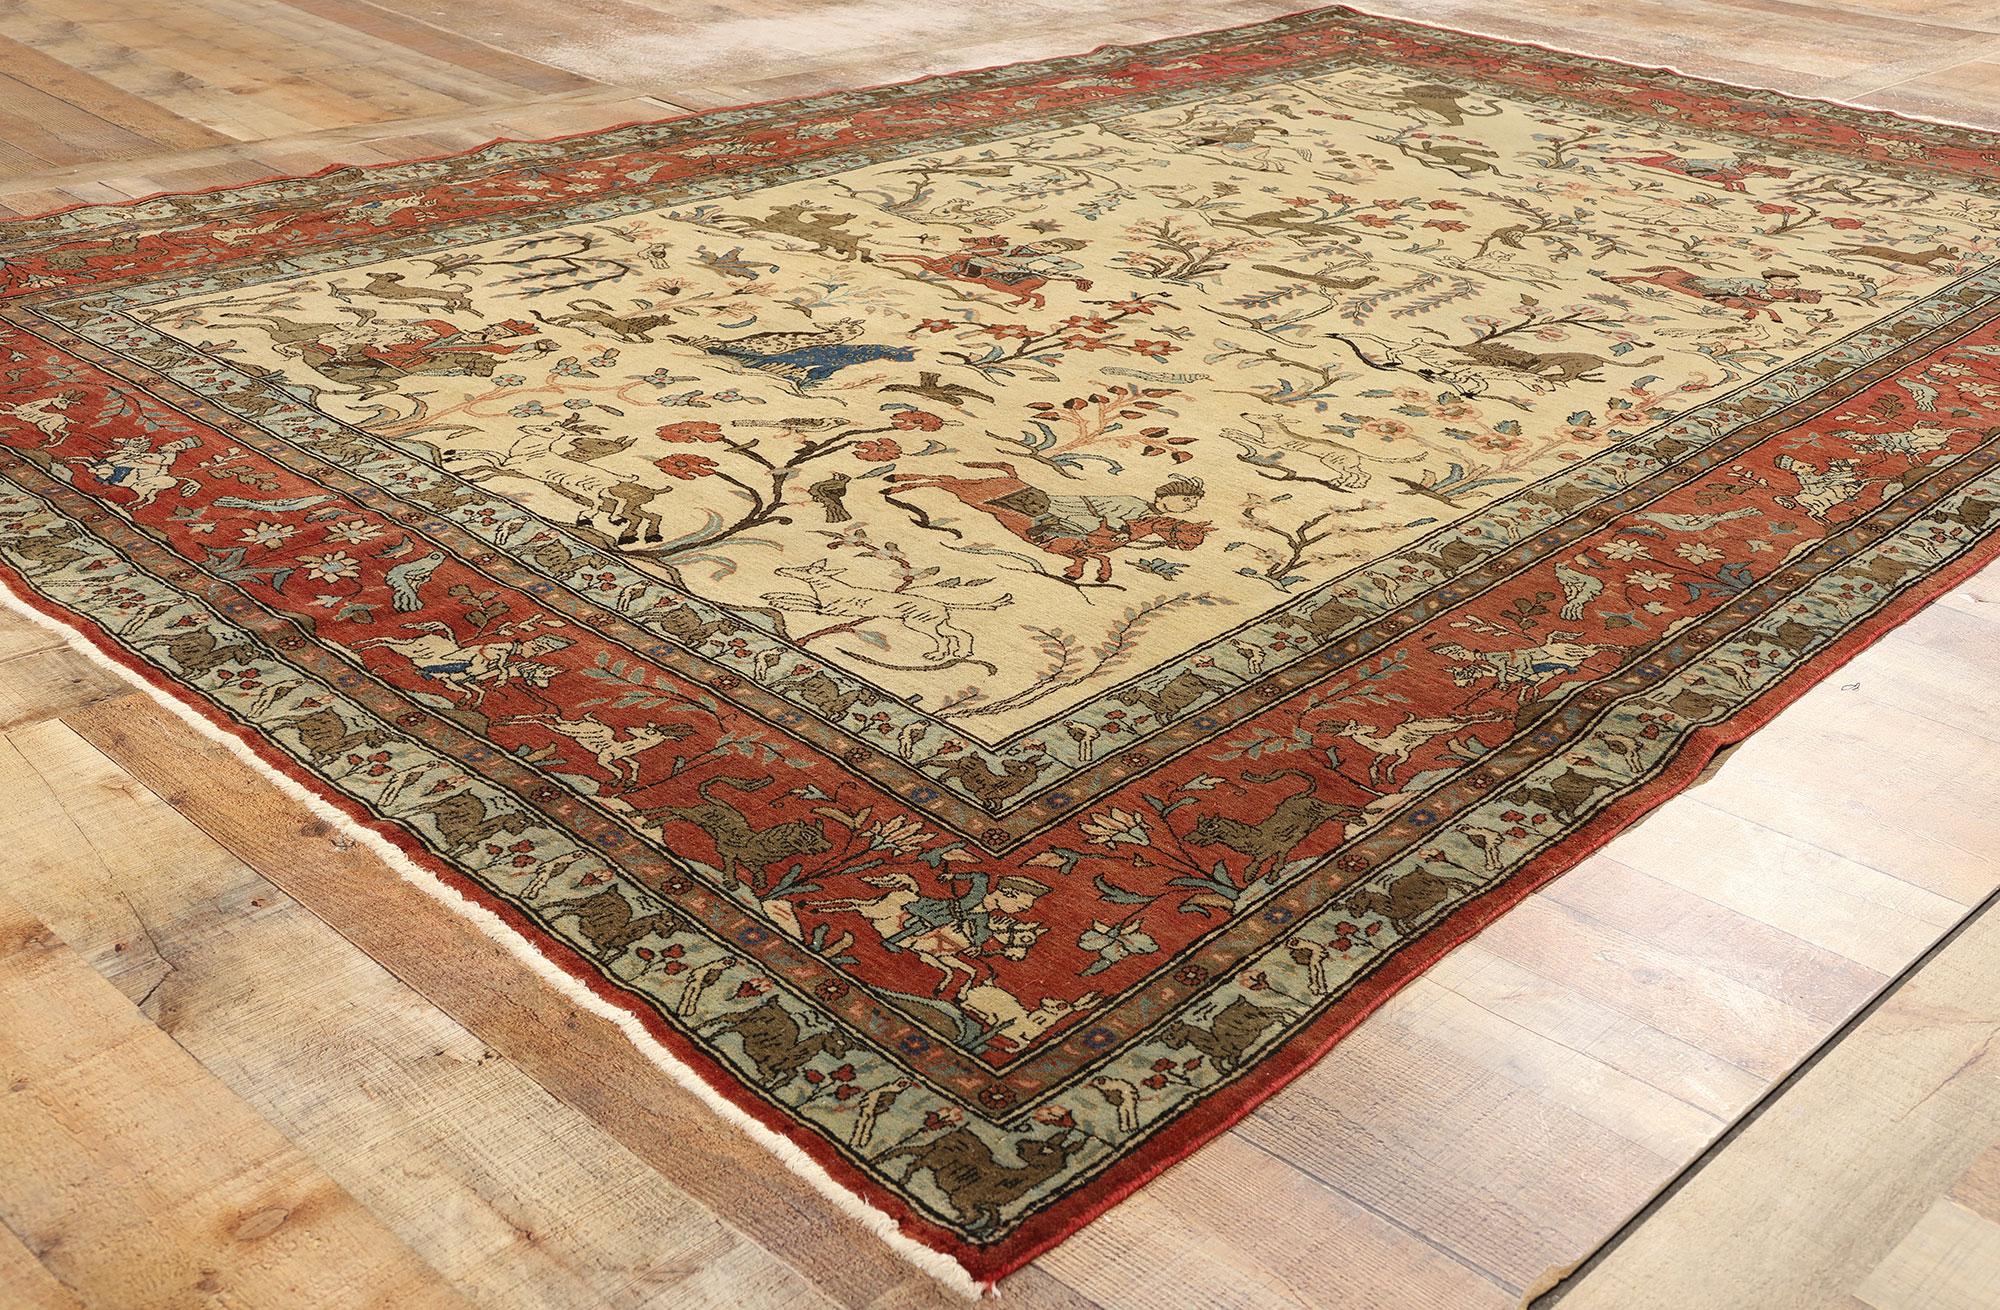 Vintage Persian Tabriz Hunting Pictorial Tableau Carpet For Sale 1